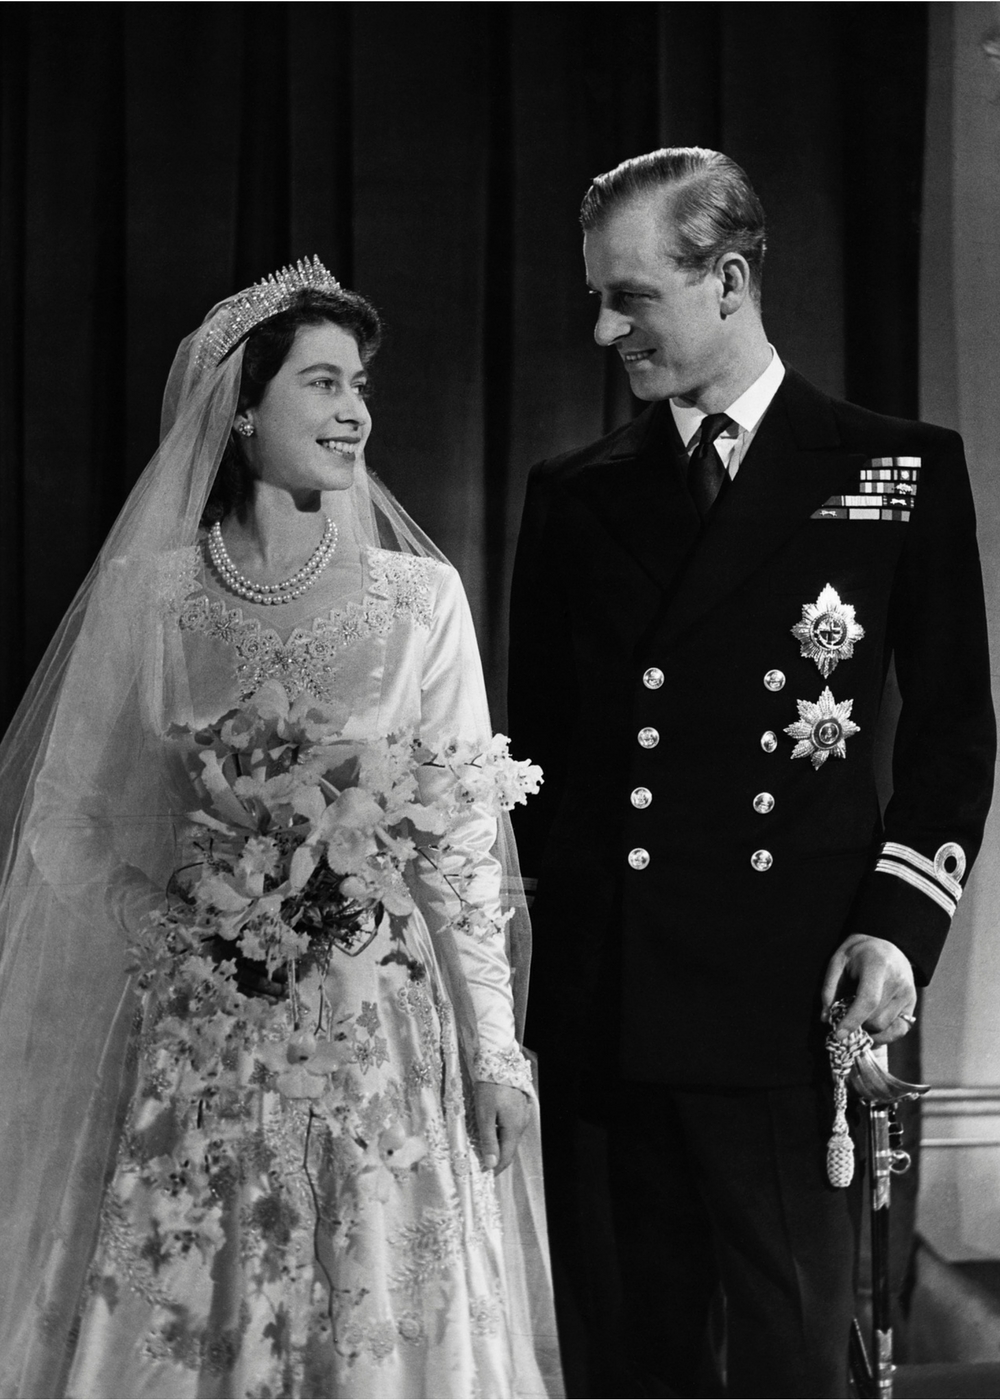 Queen Elizabeth Prince Philip Getting Married